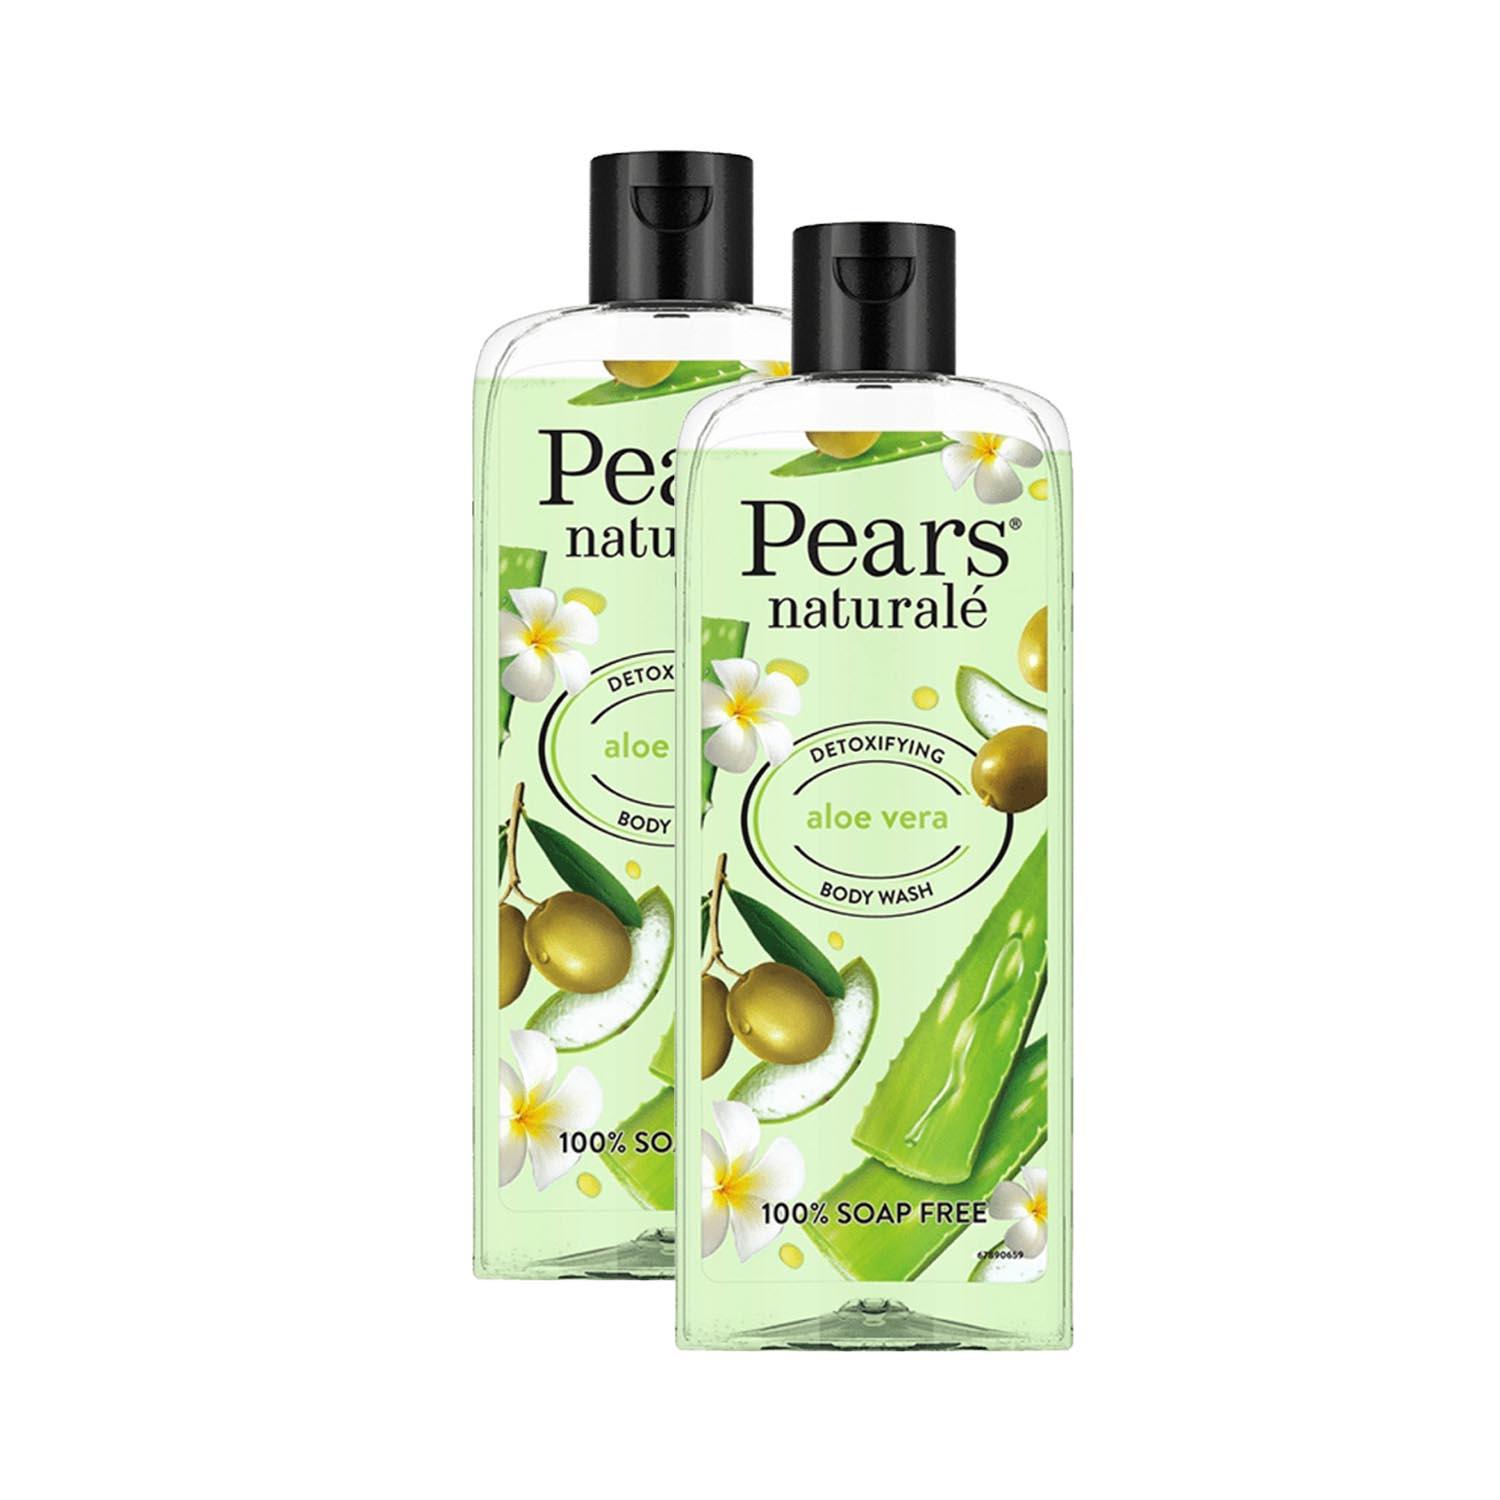 Pears | Pears Naturale Detoxifying Aloevera Bodywash Pack Of 2 Combo